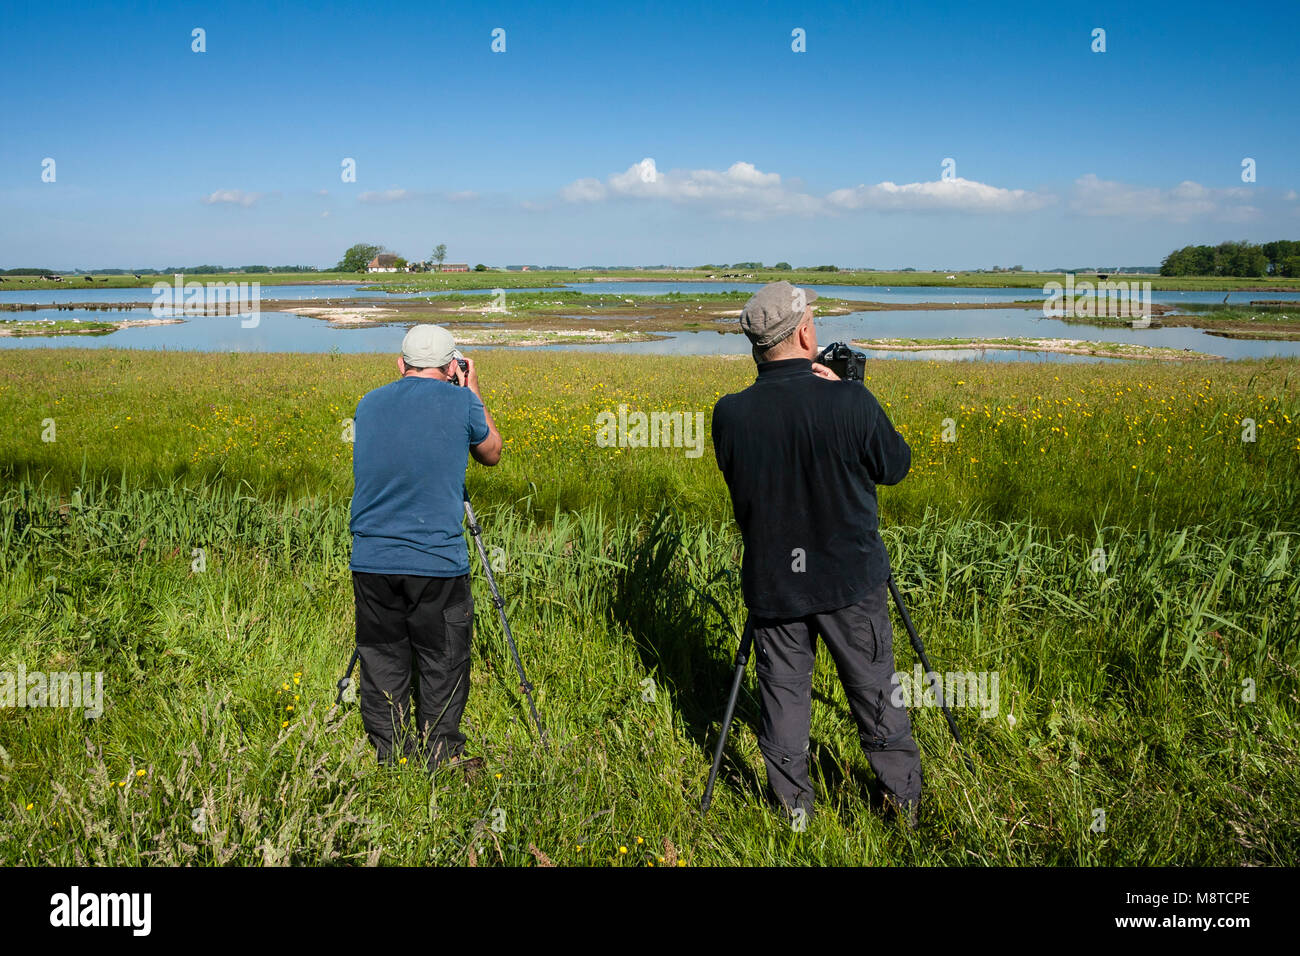 Vogelfotografen in actie bij waterplas met Vogels Vogel Fotografen in Aktion am See mit Vögeln Stockfoto